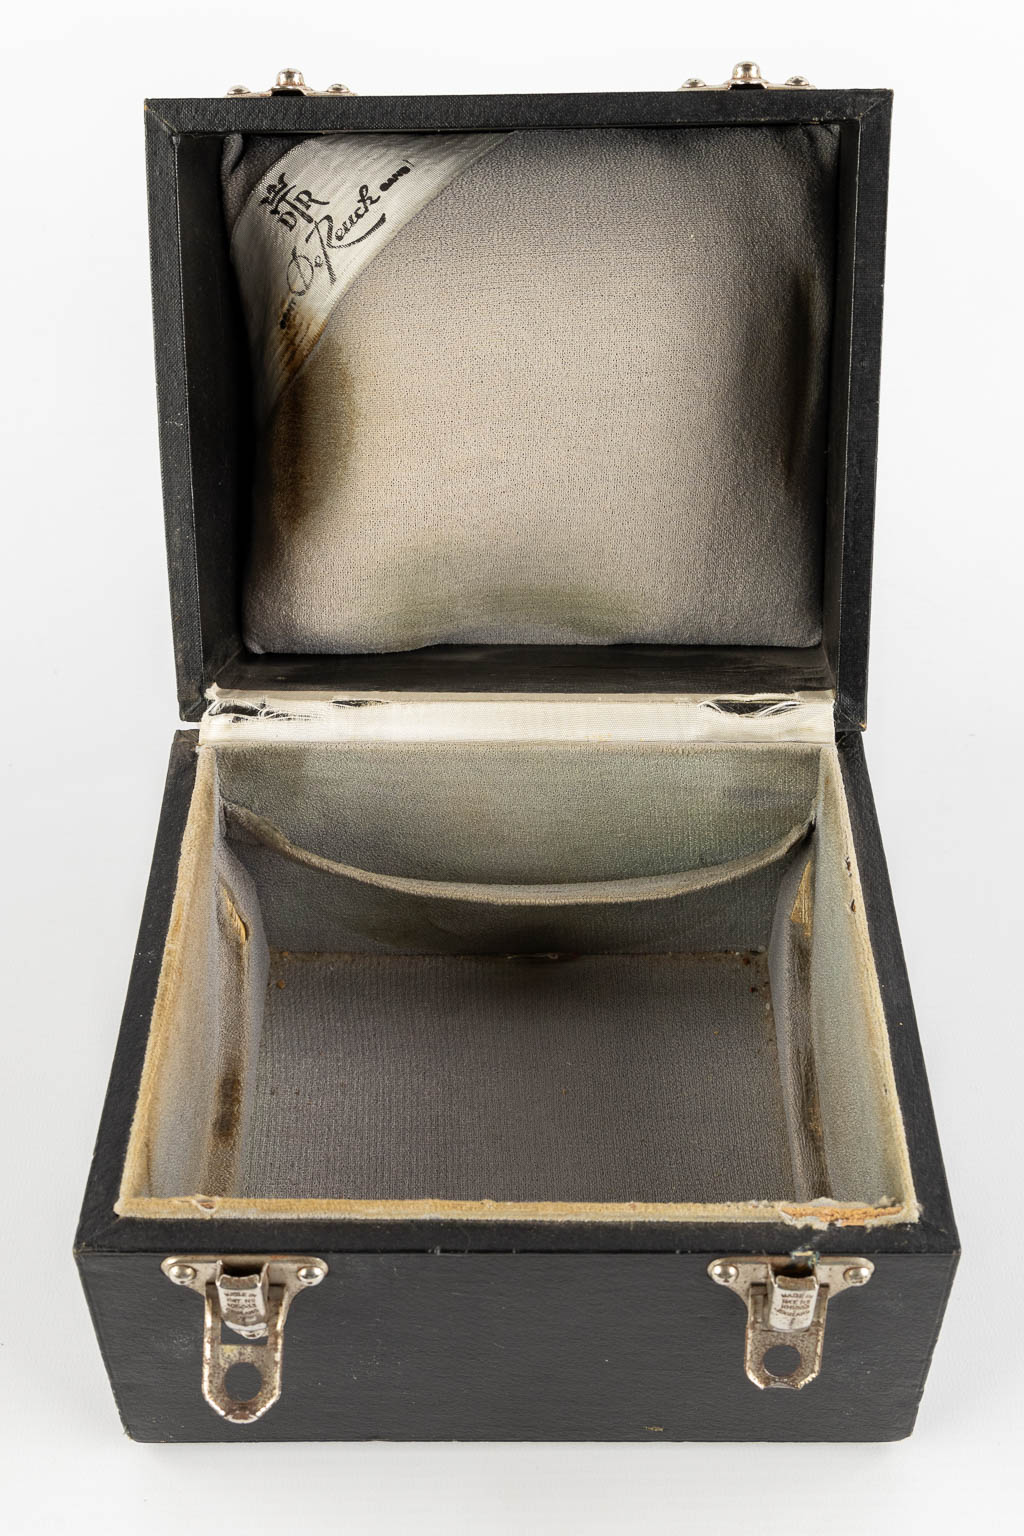 De Reuck, Ghent, a silver chalice and box. 900/1000. 658g. 1949. (H:17 x D:13,5 cm)